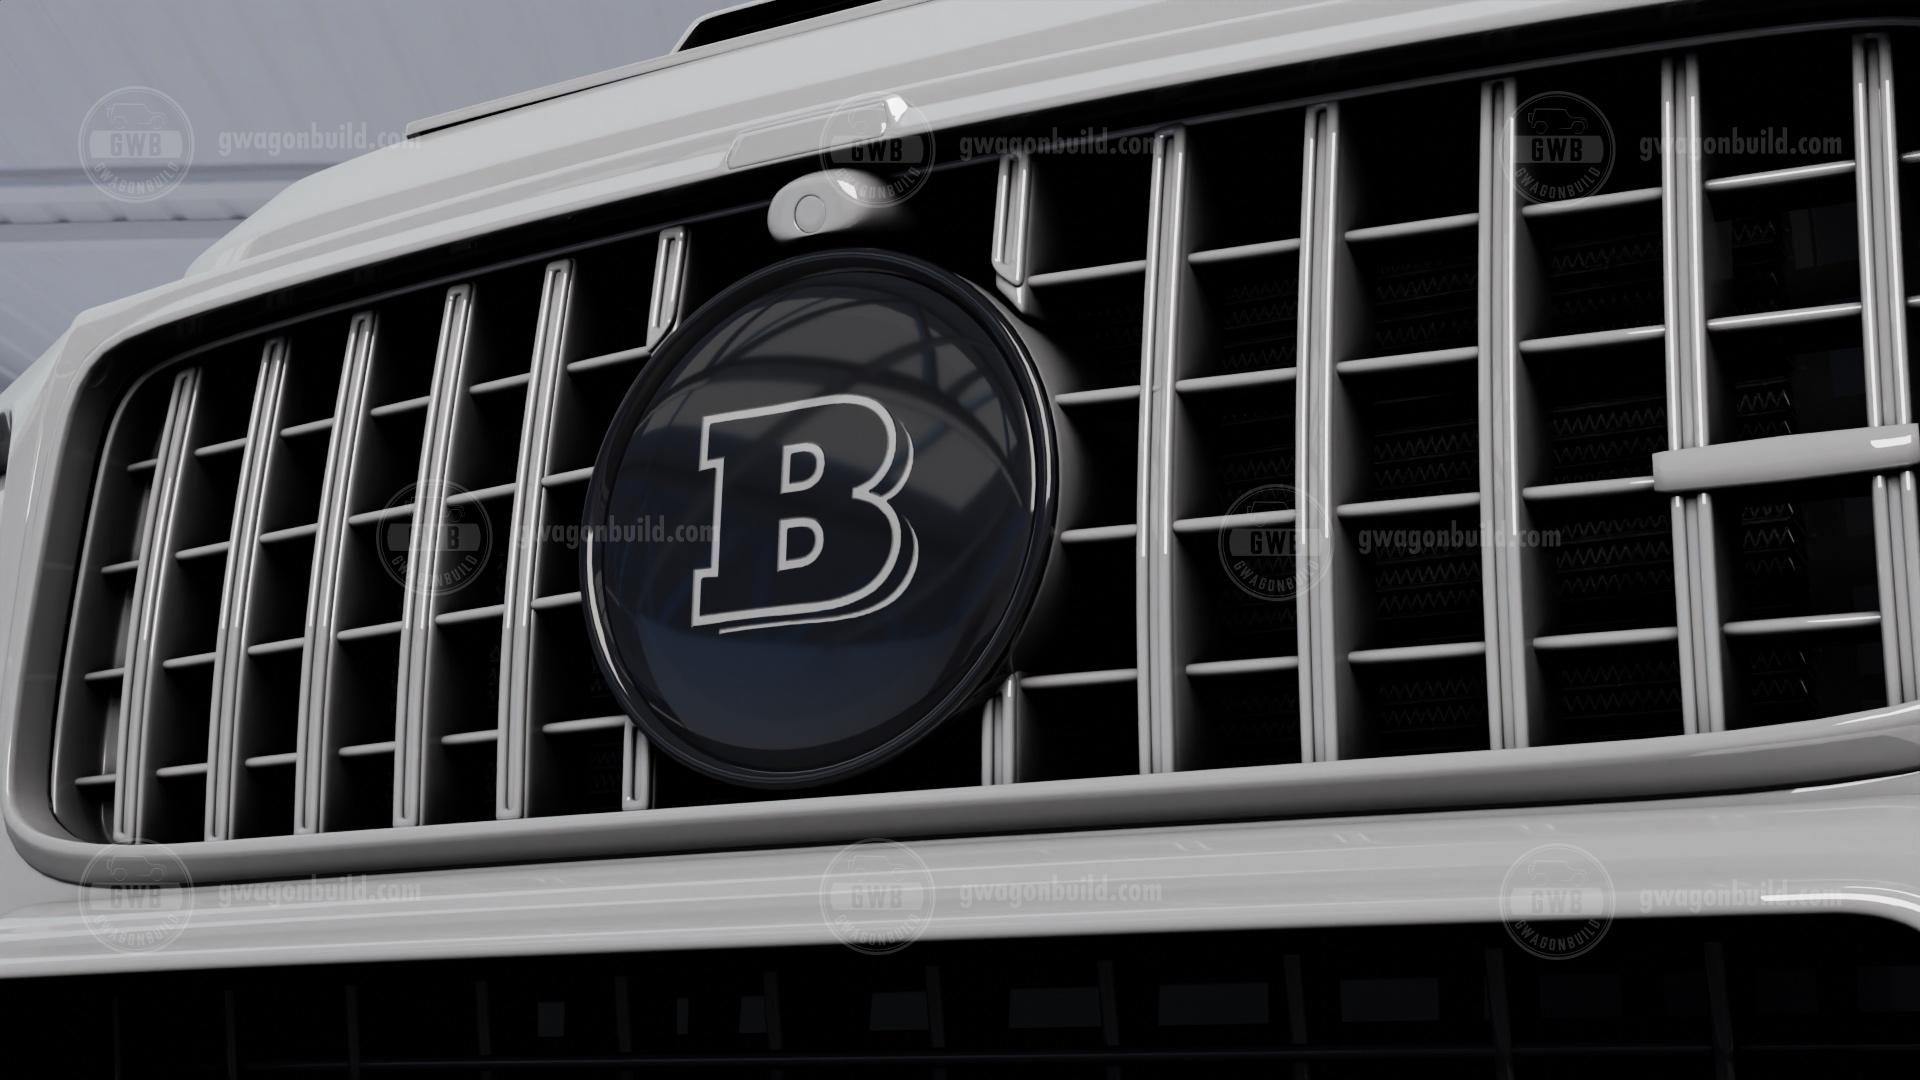 Mercedes Radiator grille emblem with Brabus logo